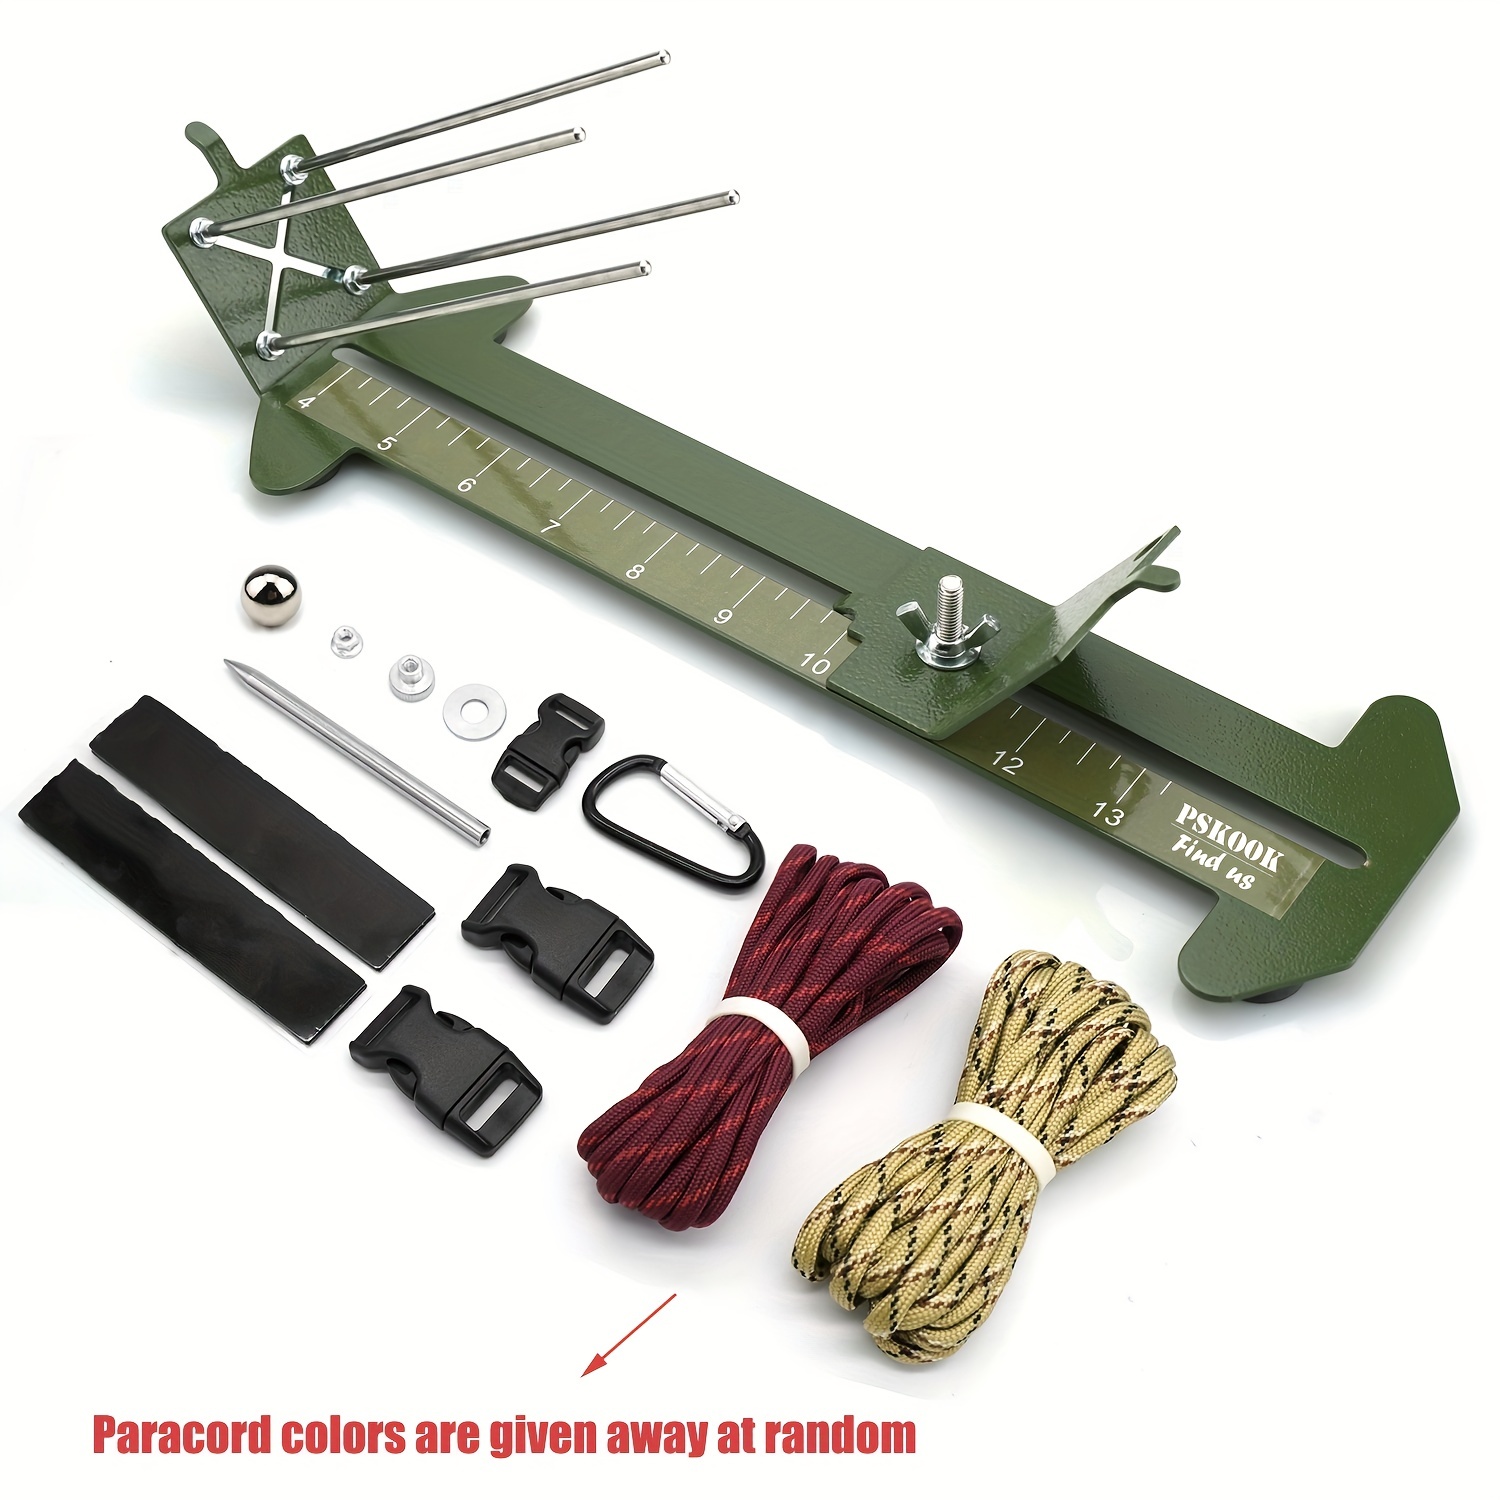 SpeedyJig Monkey Fist Jig & Kit, 2-in-1 Adjustable Length, Includes Cord  & Buckles, USA Made